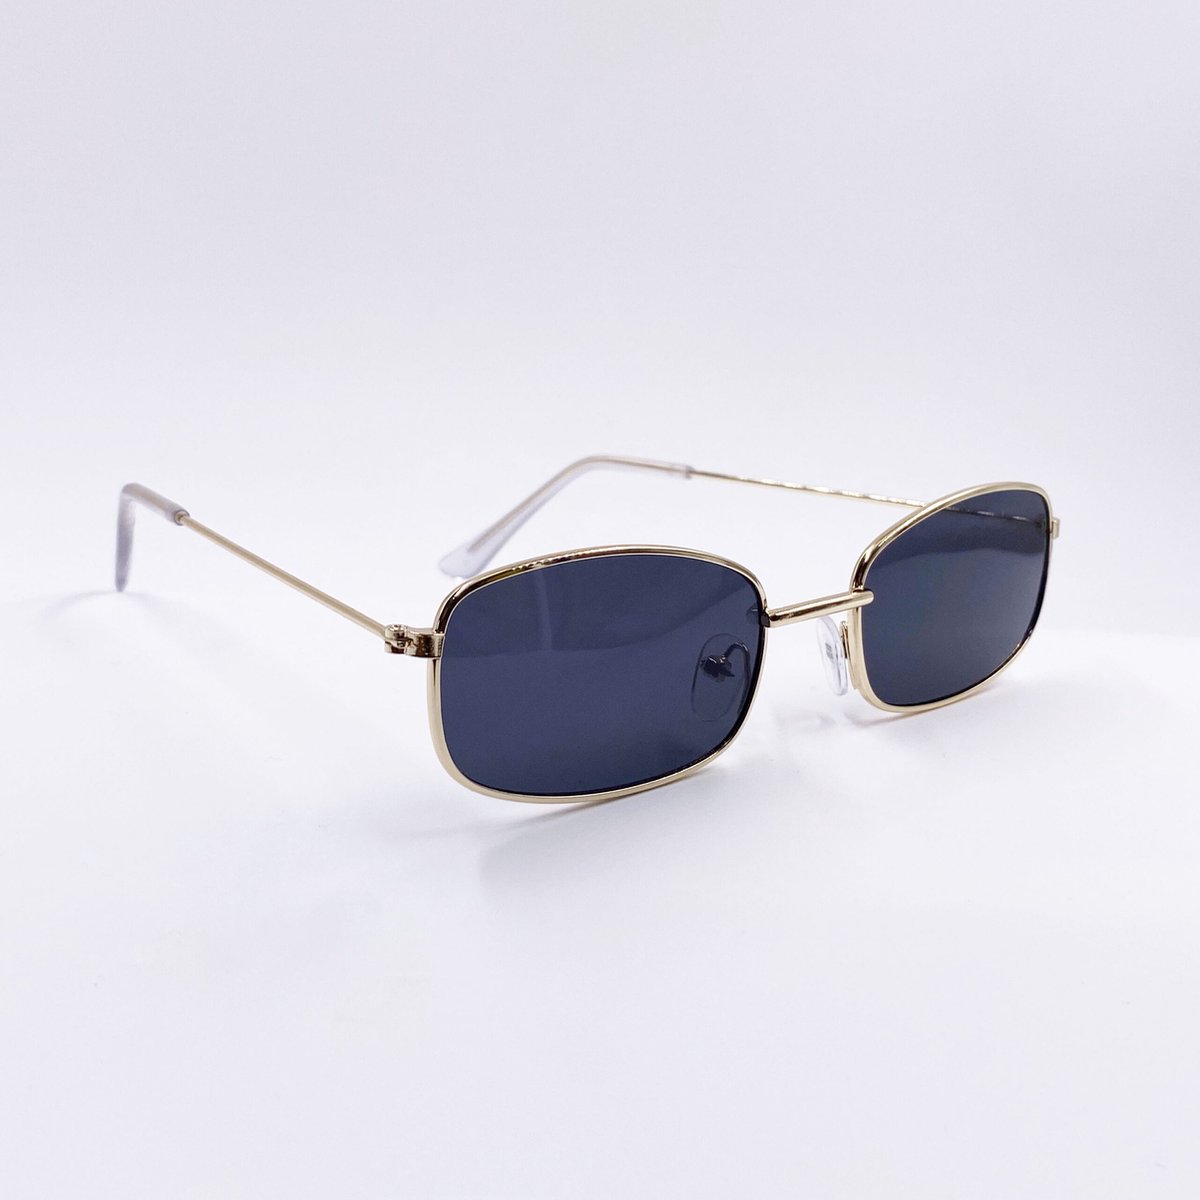 Retro Glasses - festivalbril - zonnebril - feestbril - festival spacebril - festivalzonnebril | Zwart / Goud | PartyGlasses